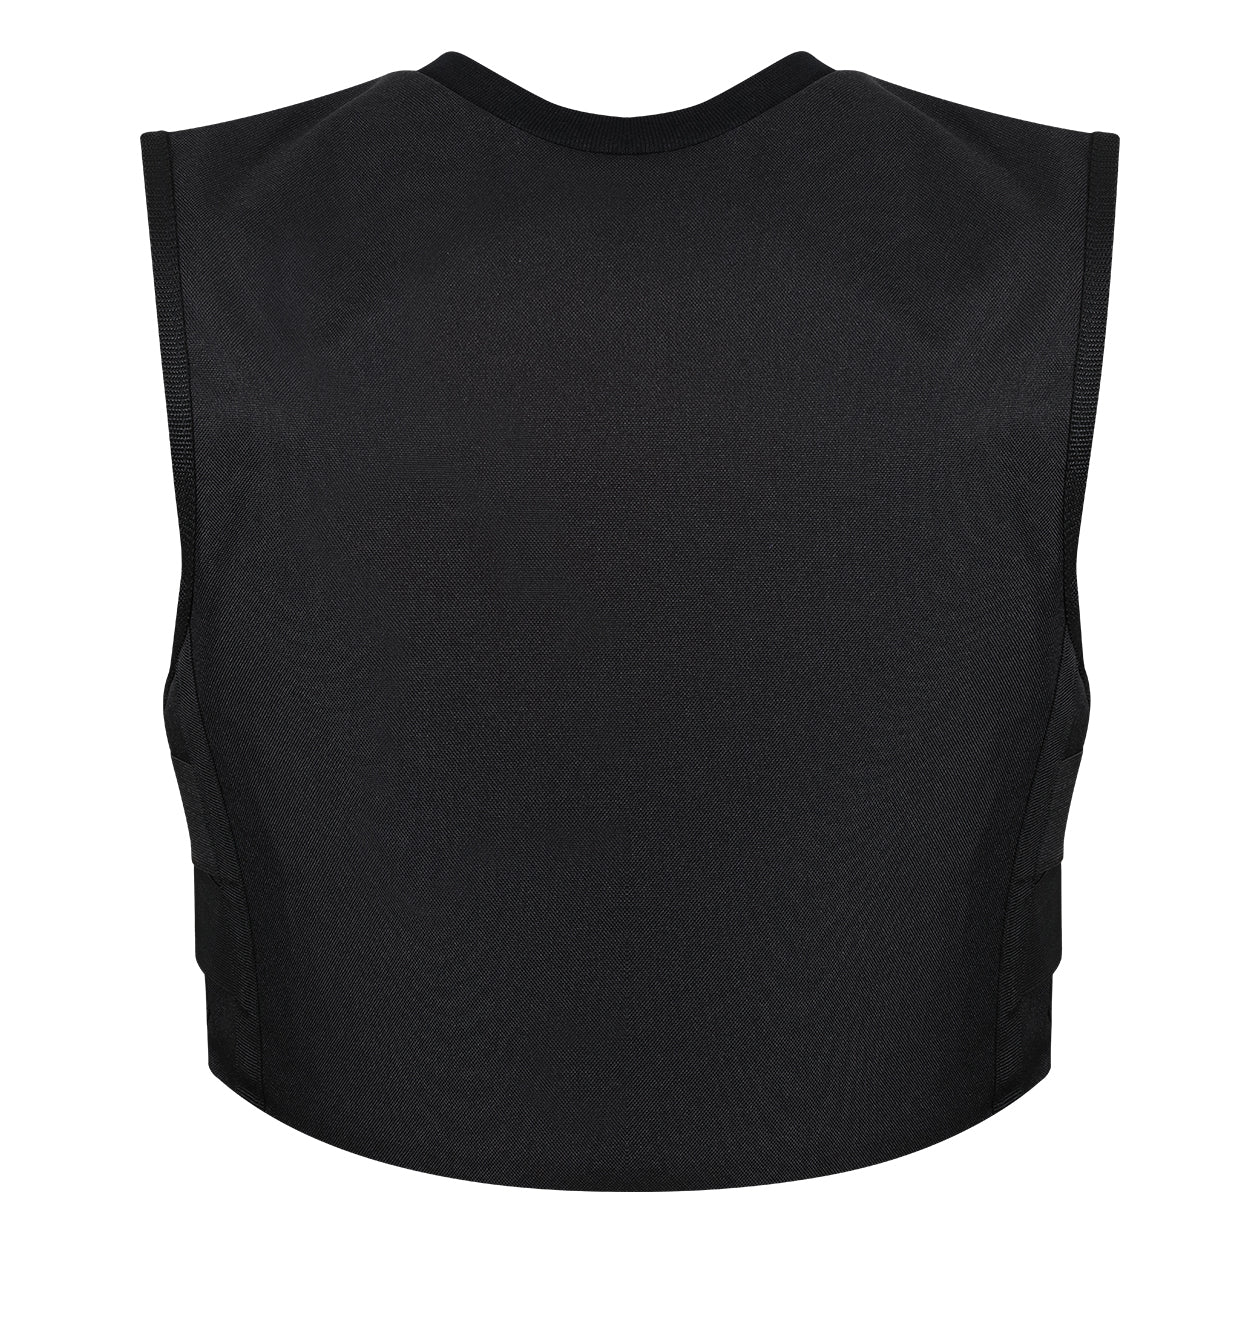 Covert/Overt Ballistic Level II + Stab Level 1 Vest - Black – SafeGuard  Clothing US